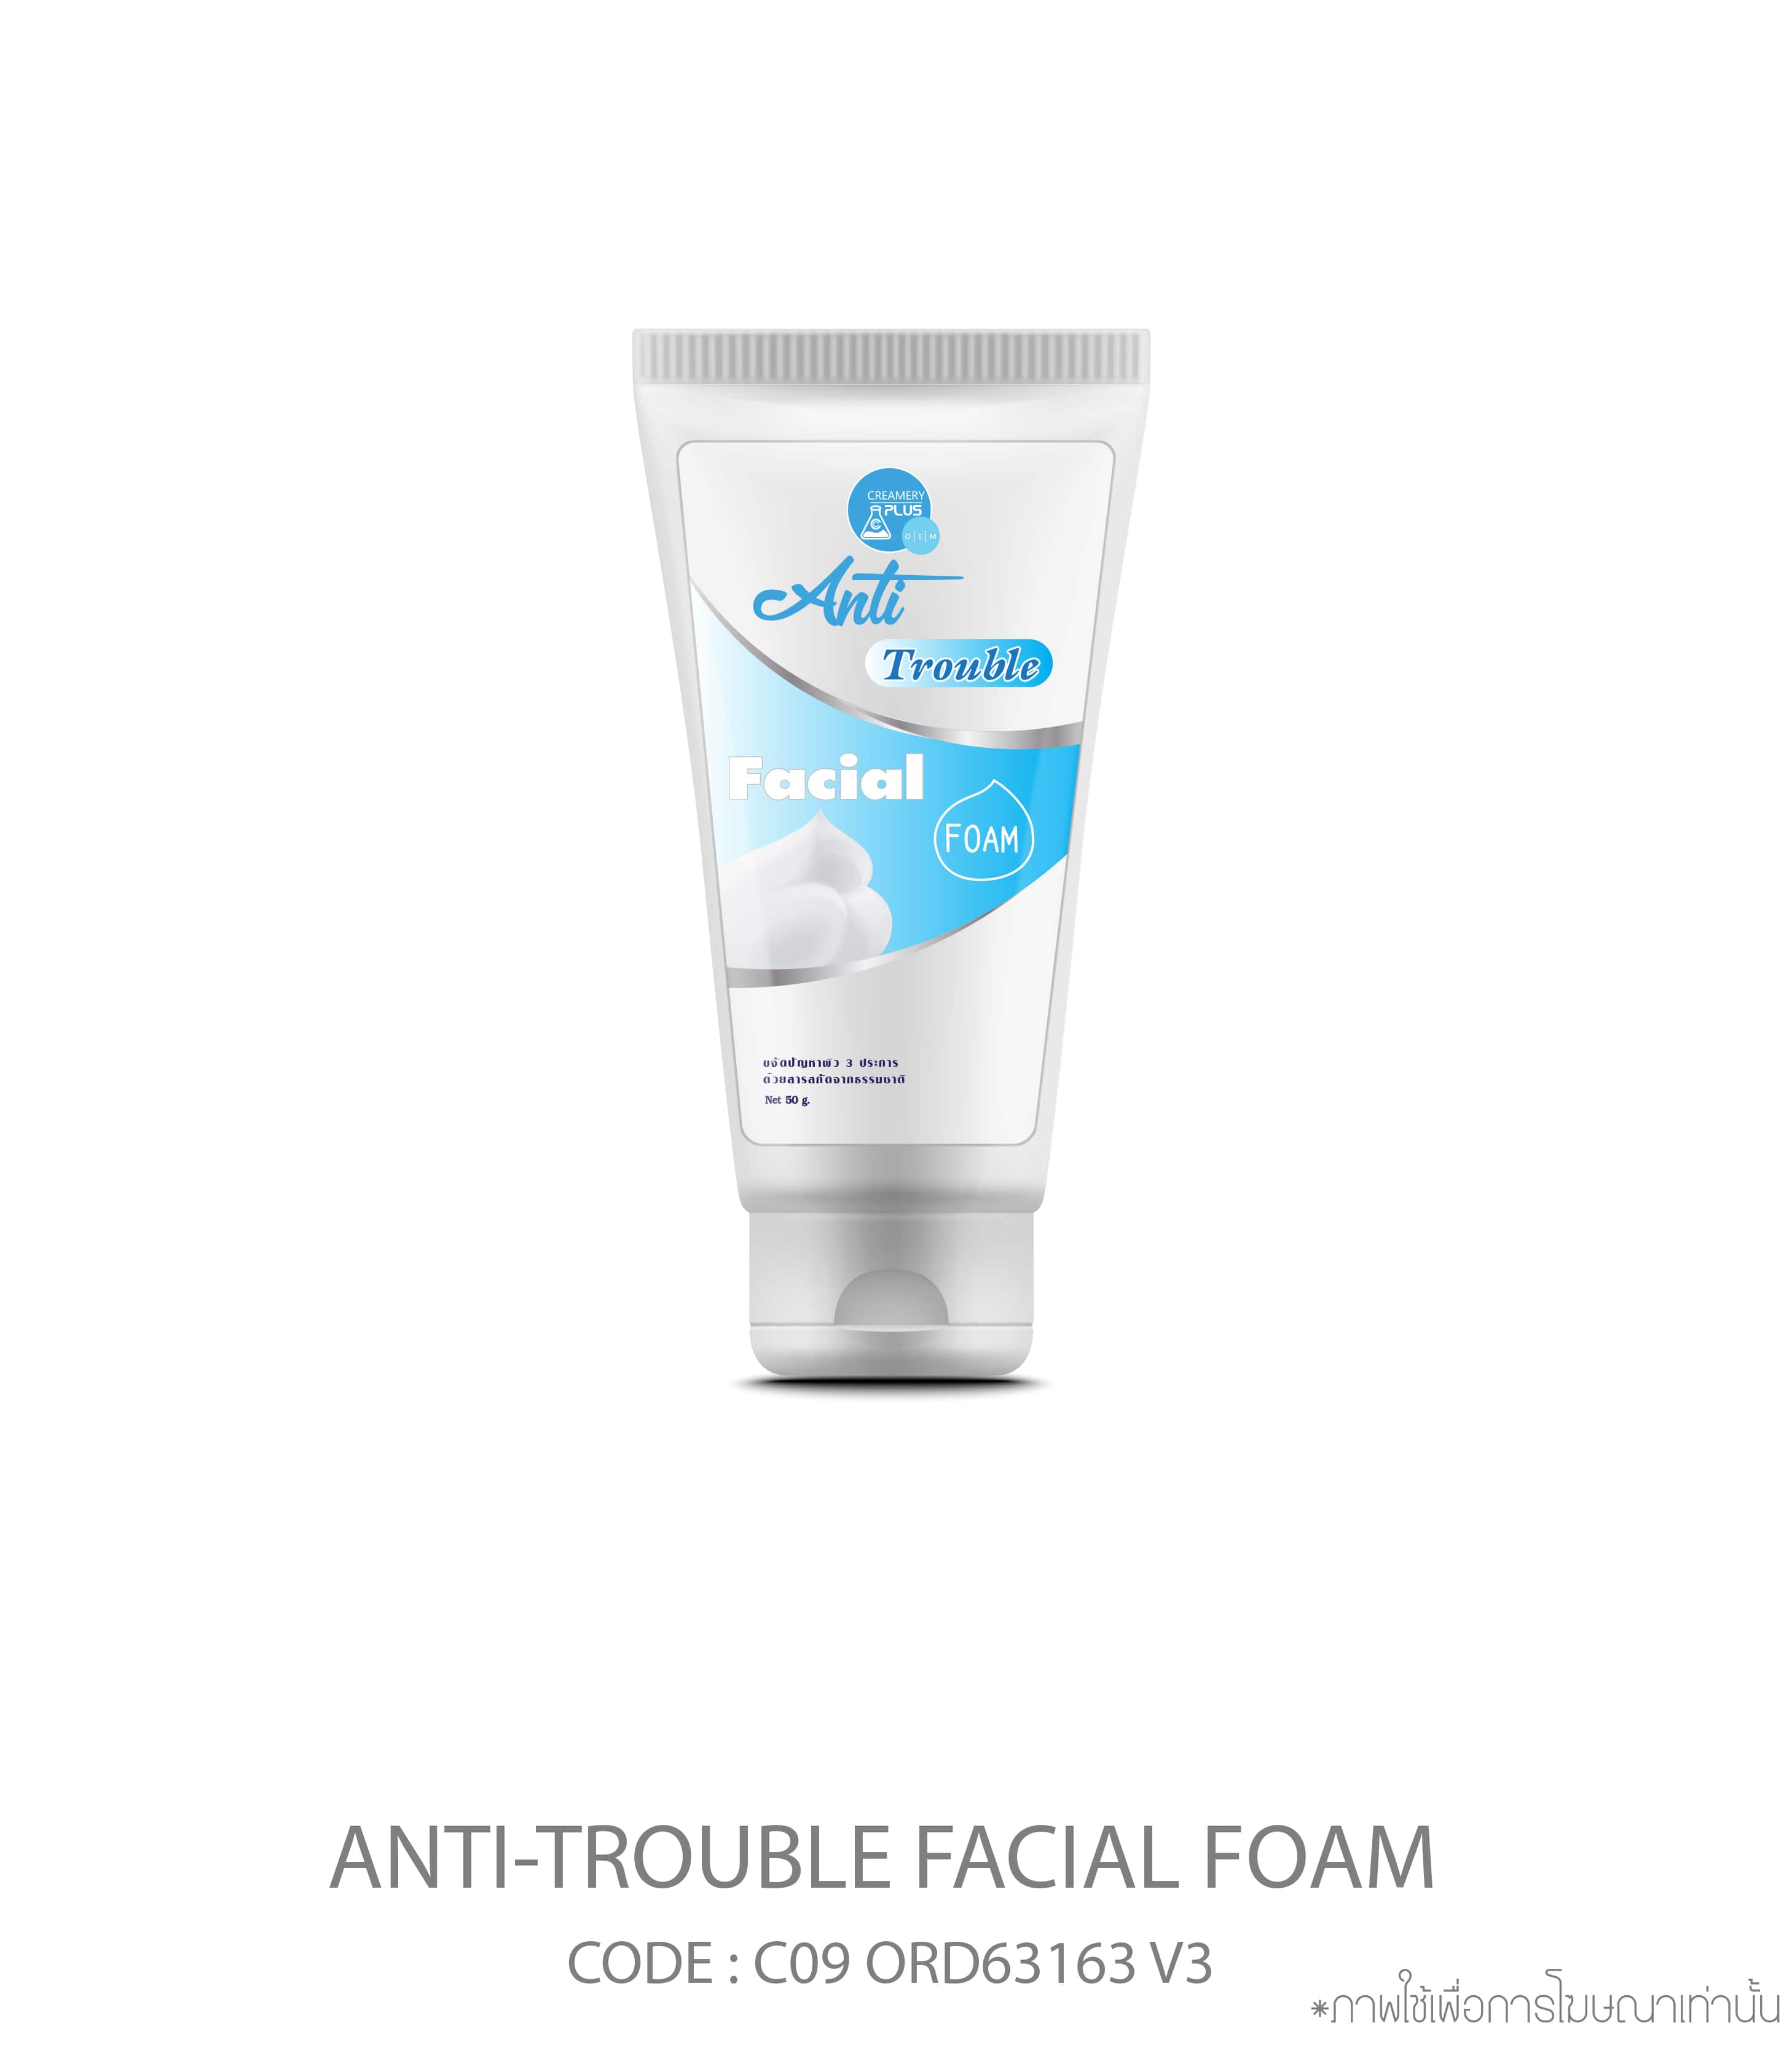 Anti-Trouble Facial Foam